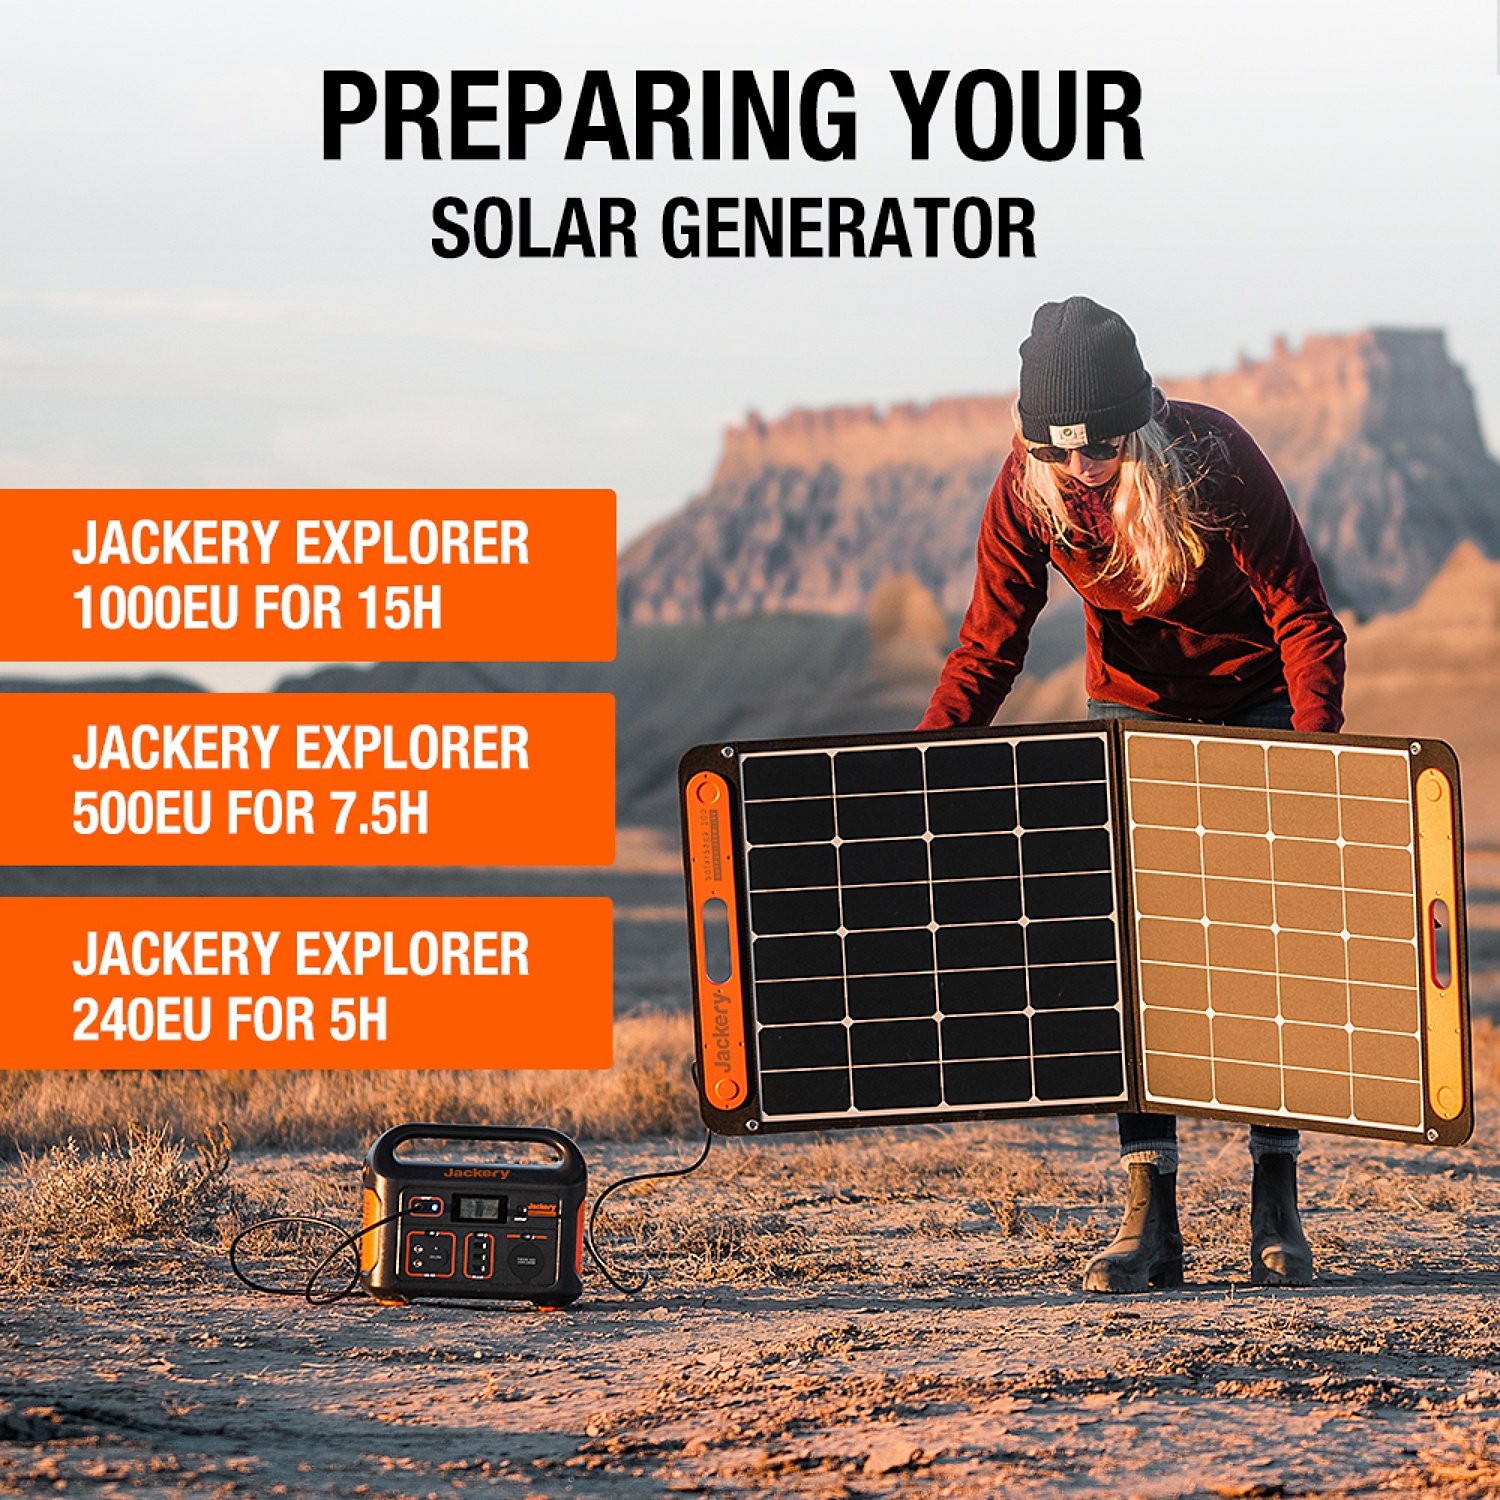 Jackery SolarSaga 100 Solarpanel